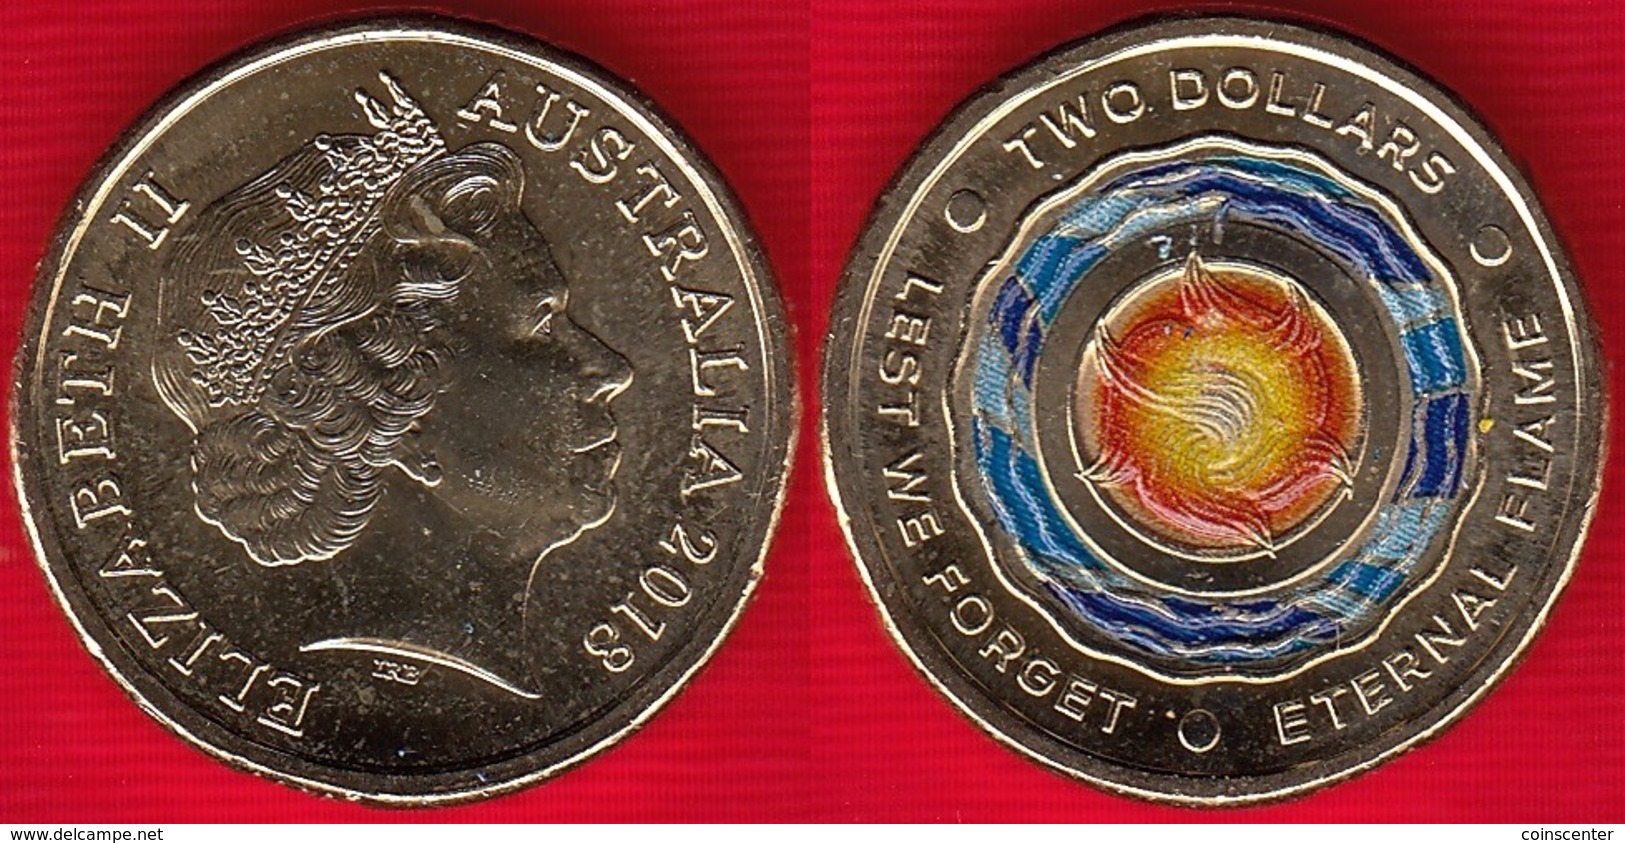 Australia 2 Dollars 2018 "Lest We Forget - Eternal Flame" COLORED UNC - 2 Dollars